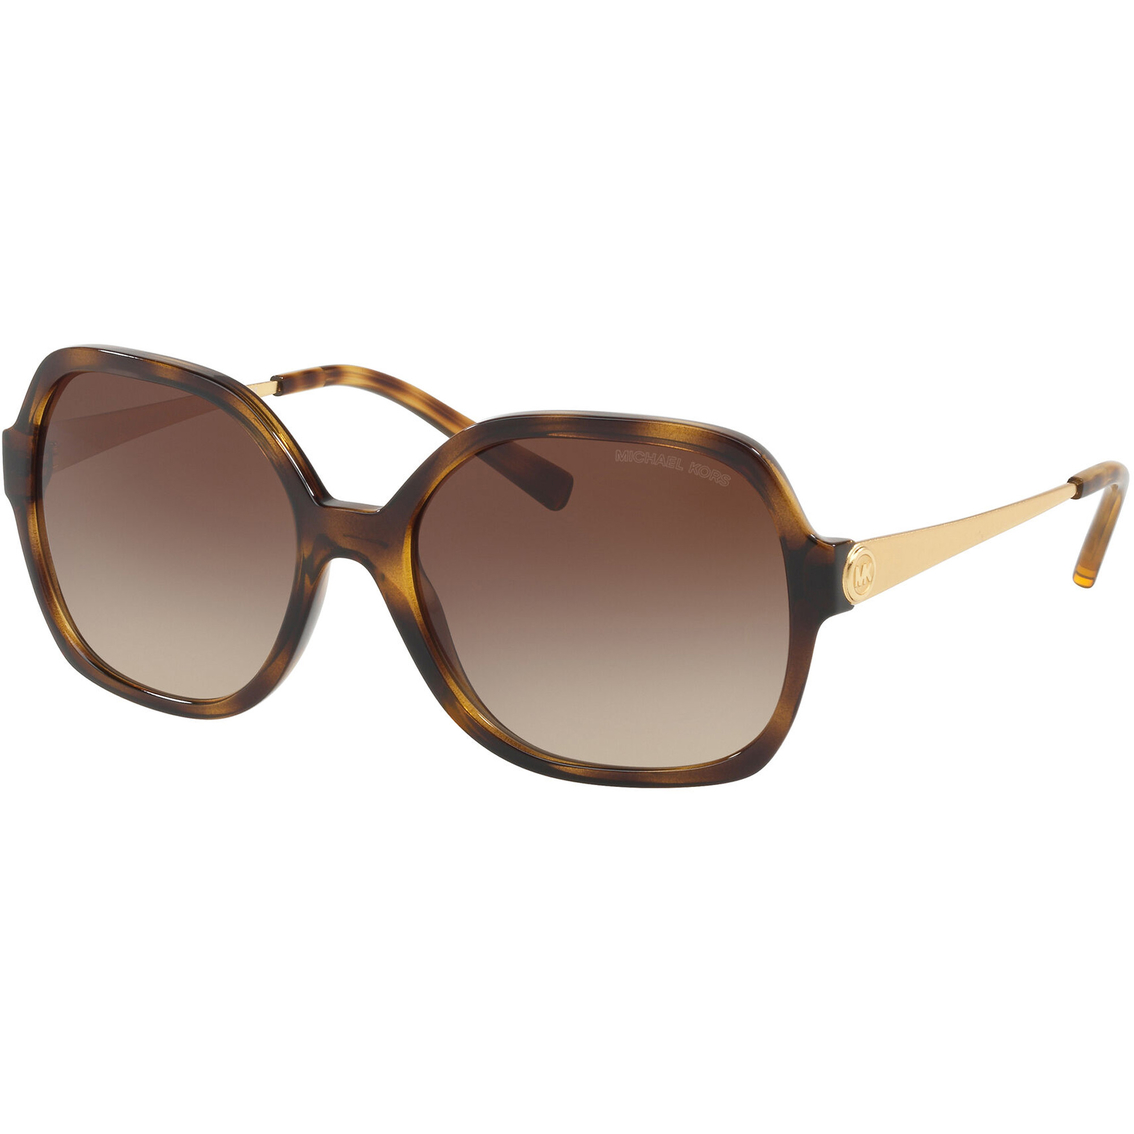 Michael Kors Gradient Square Sunglasses 0mk2070 30058e56 | Women's ...